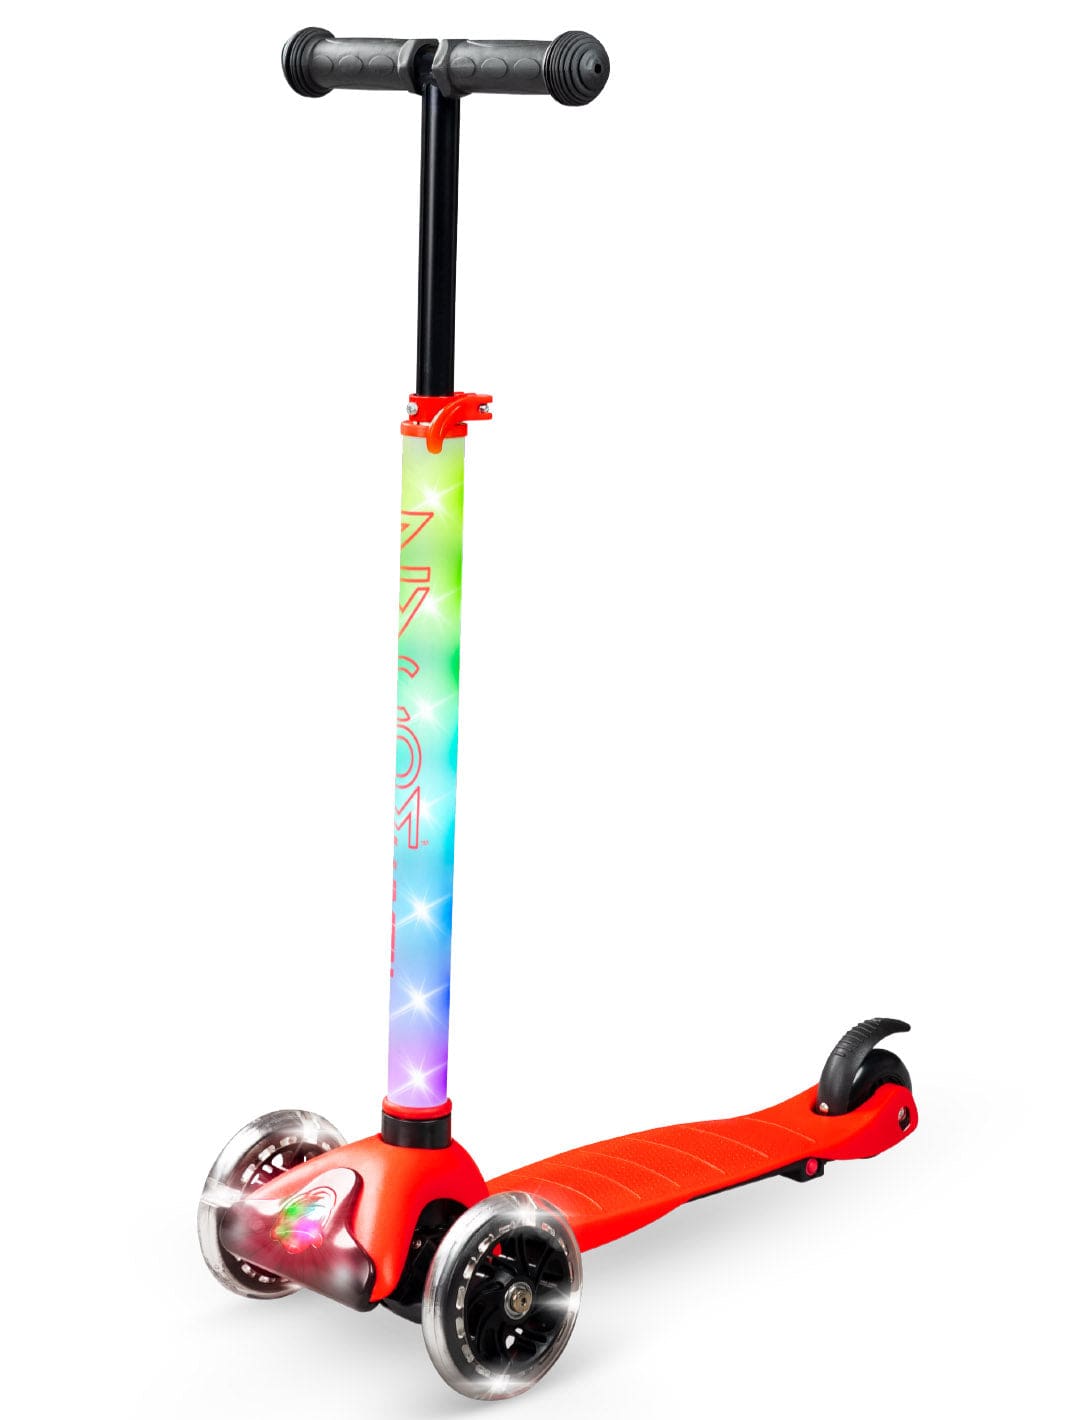 zycom micro jetson light-up kick scooter rgb LED lights wheels adjustable